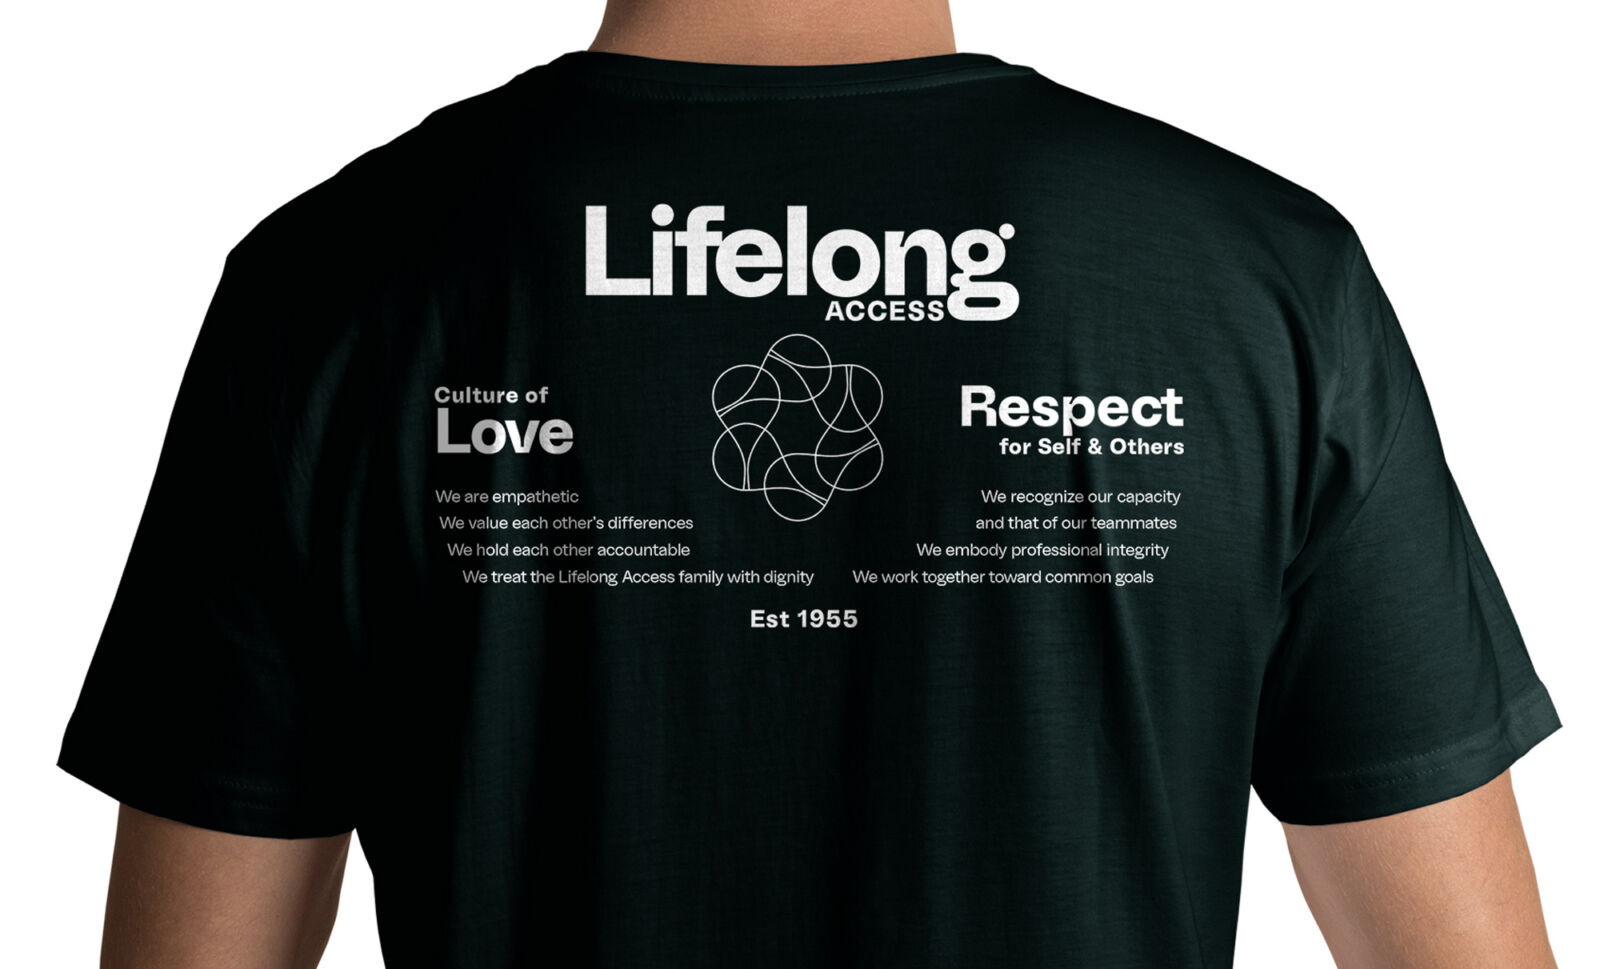 non-profit rebrand shirt with core values